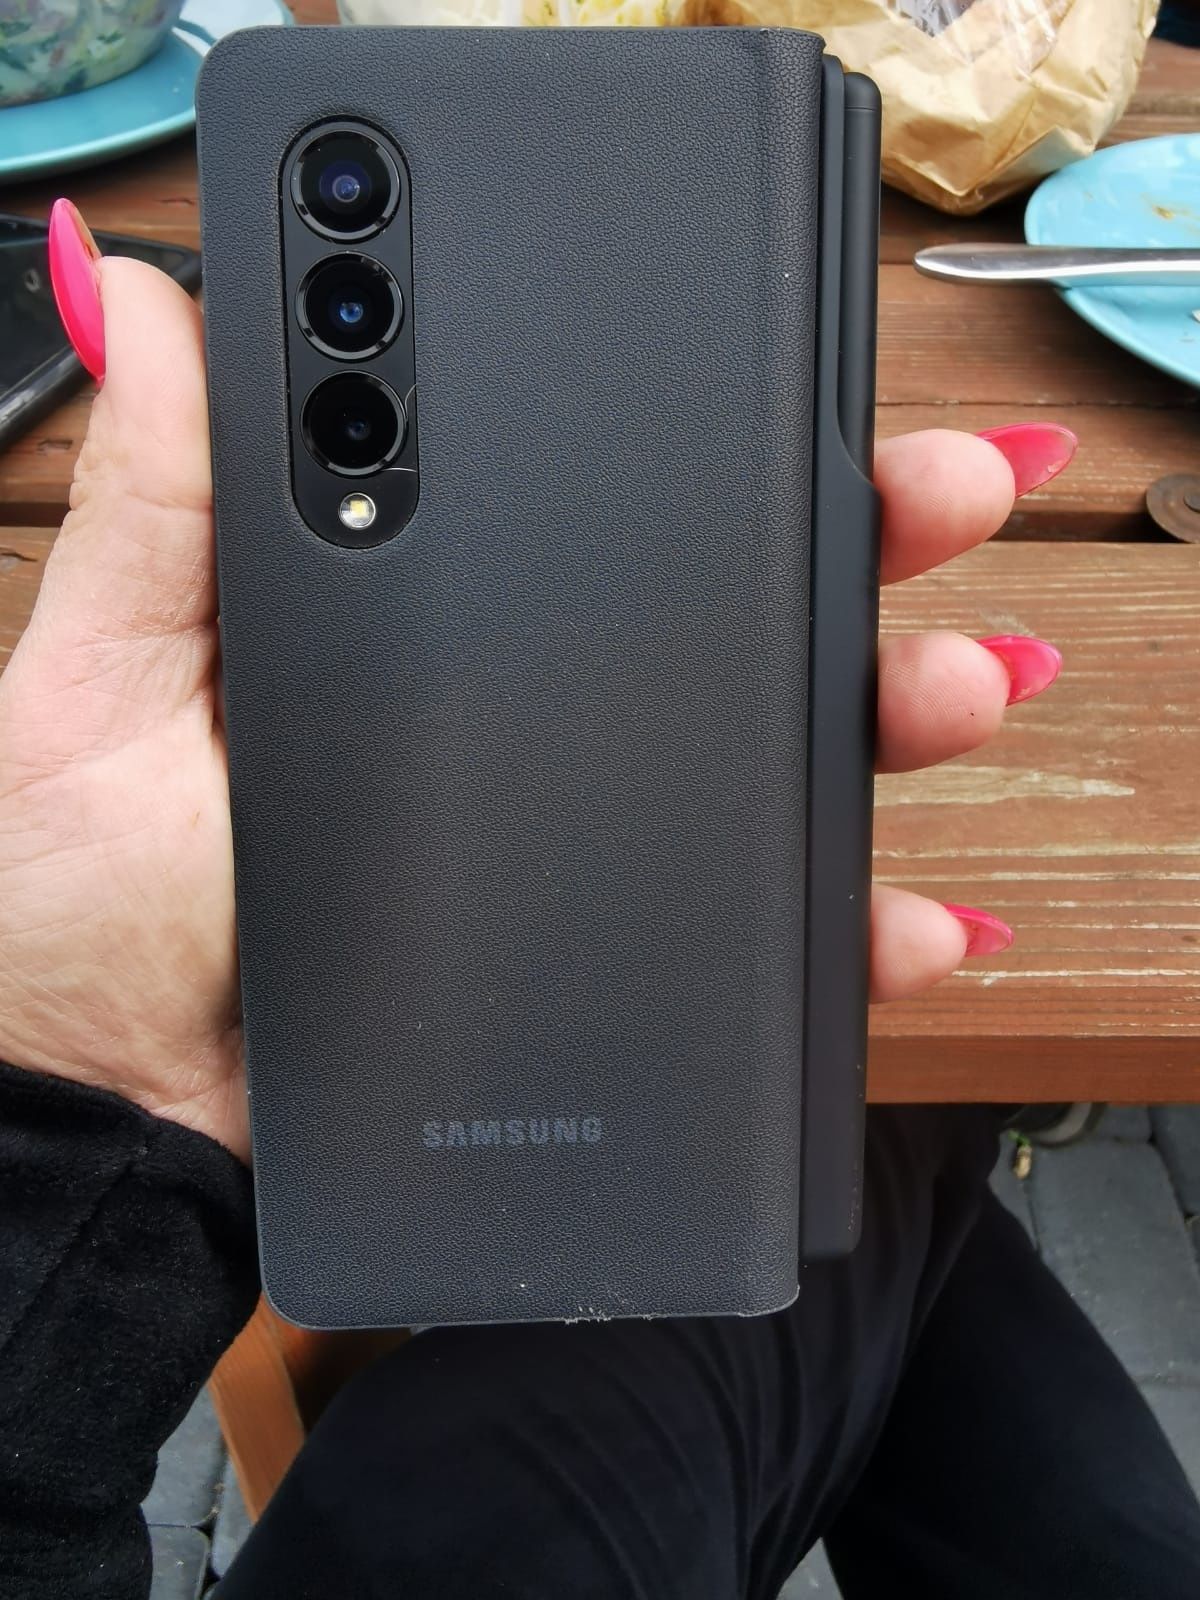 Samsung zfold 3 5G